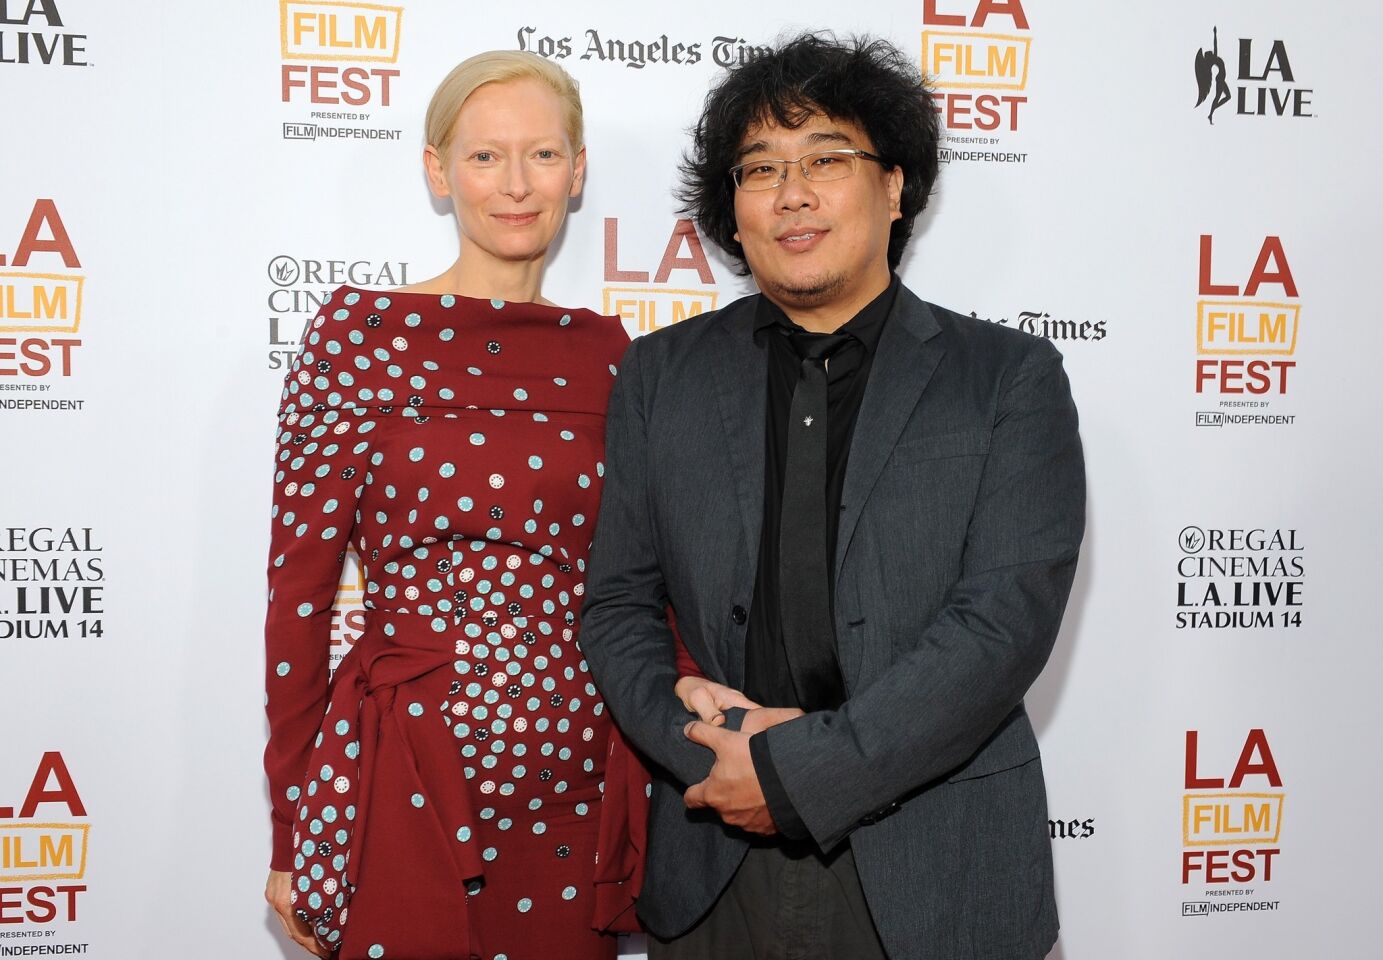 Los Angeles Film Festival 2014